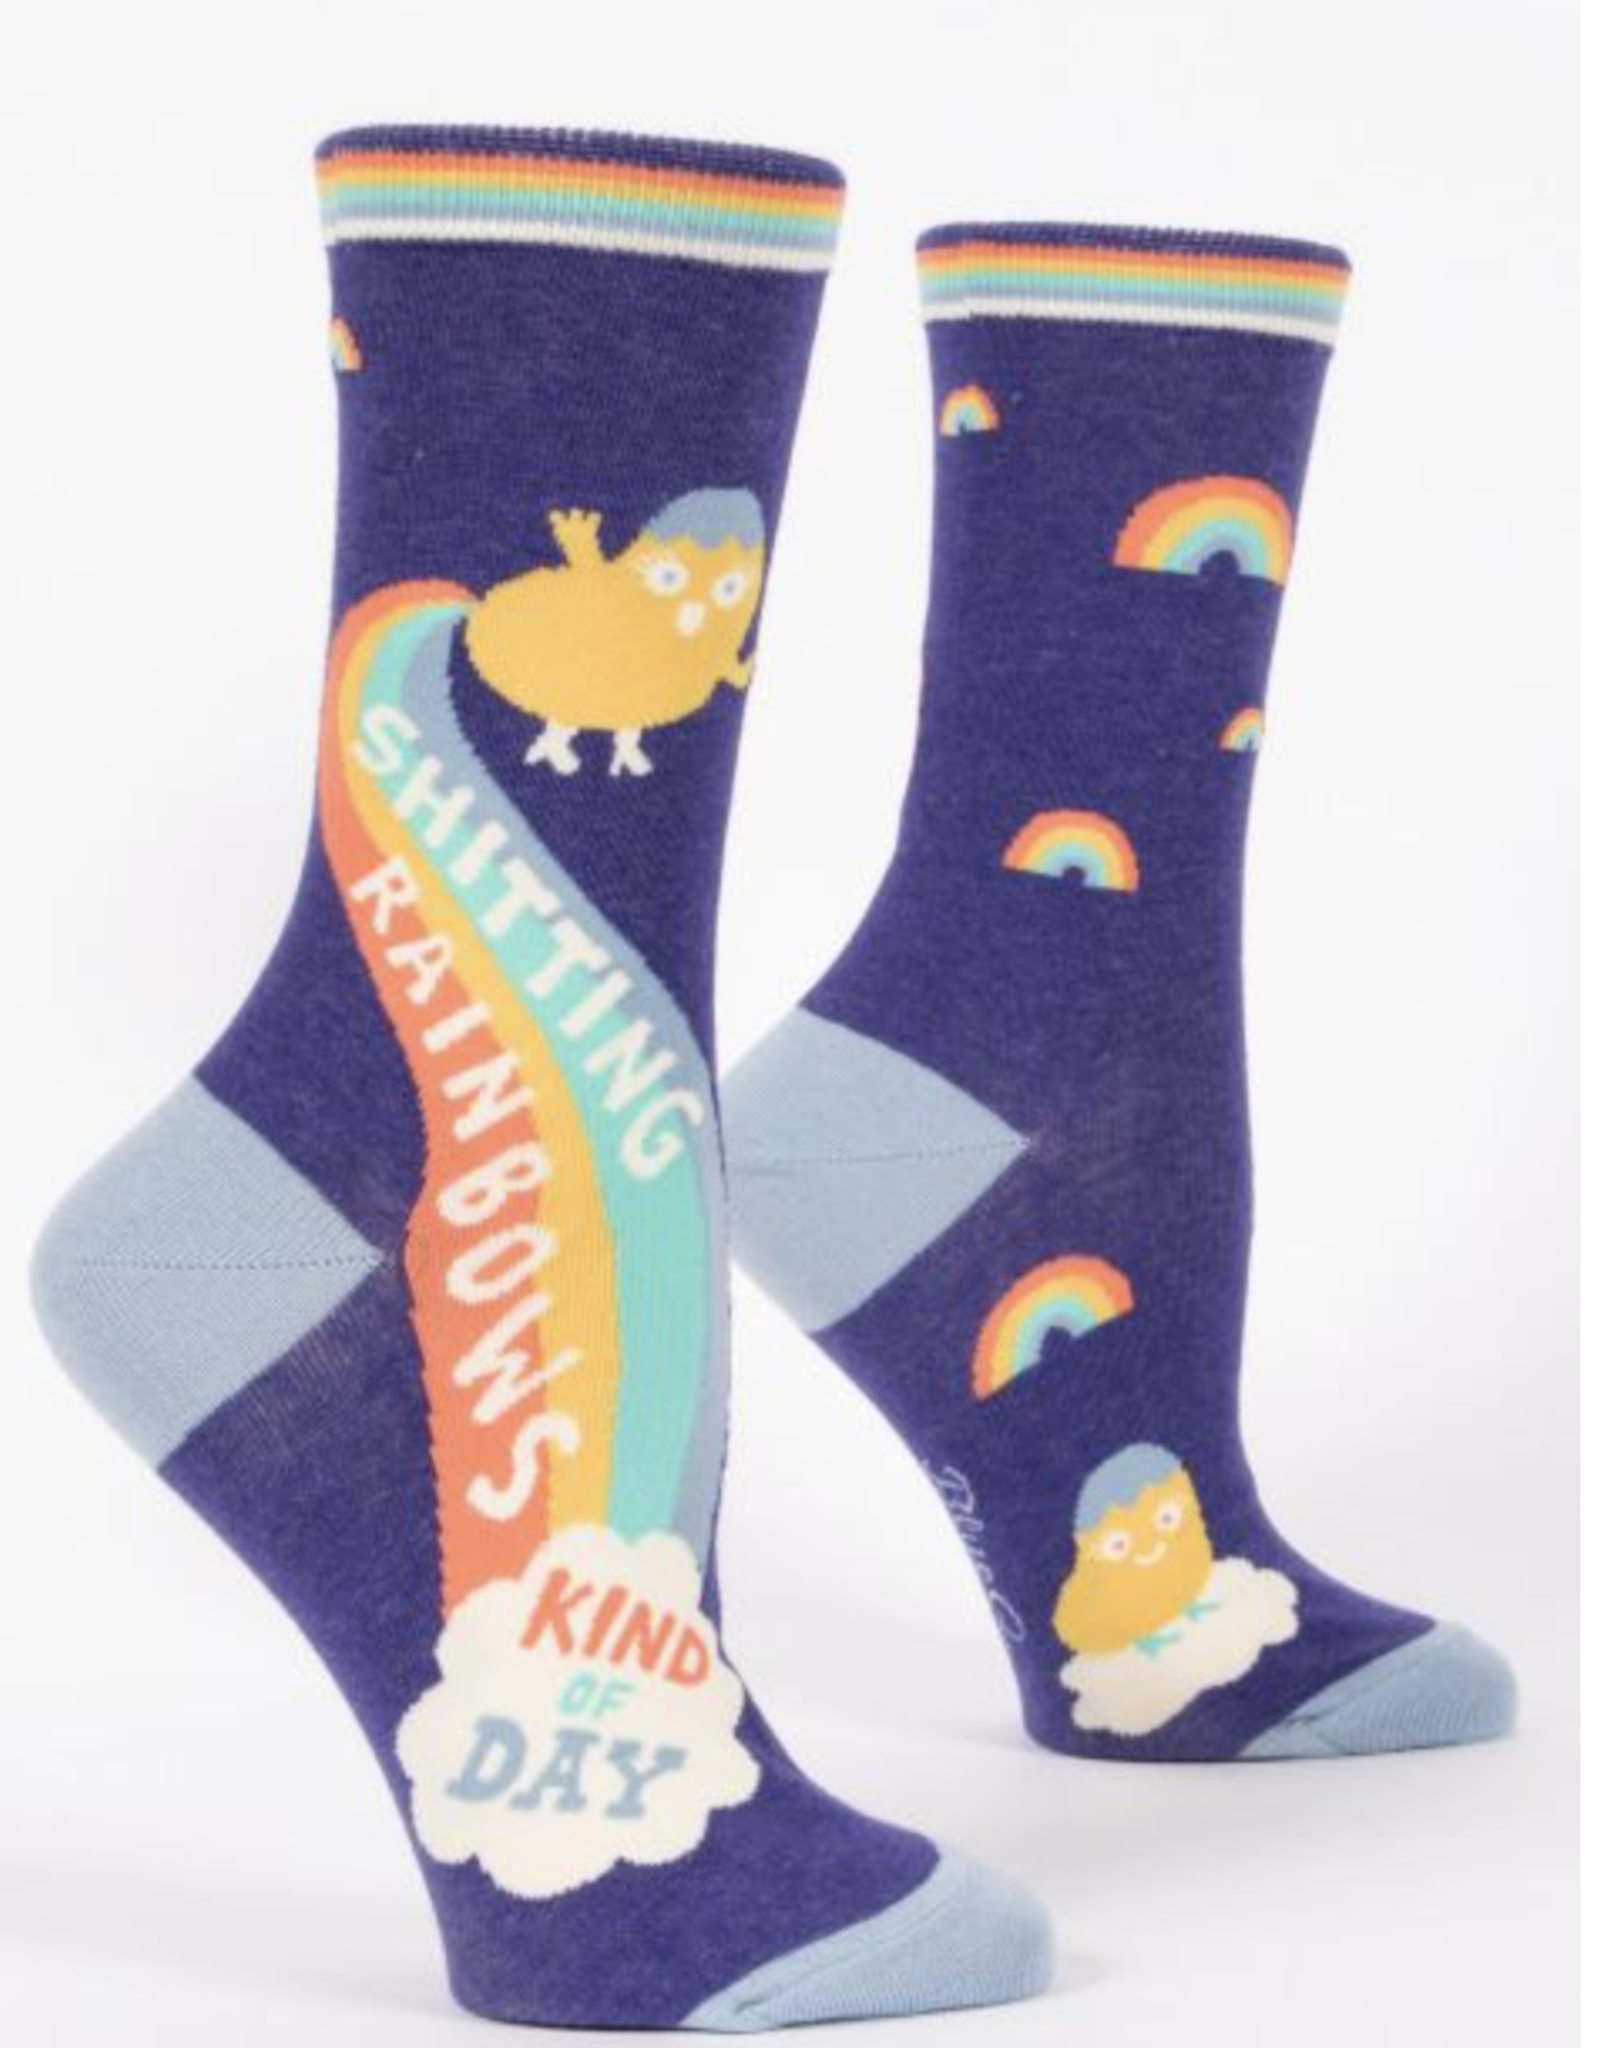 Shitting Rainbows Kind of Day socks